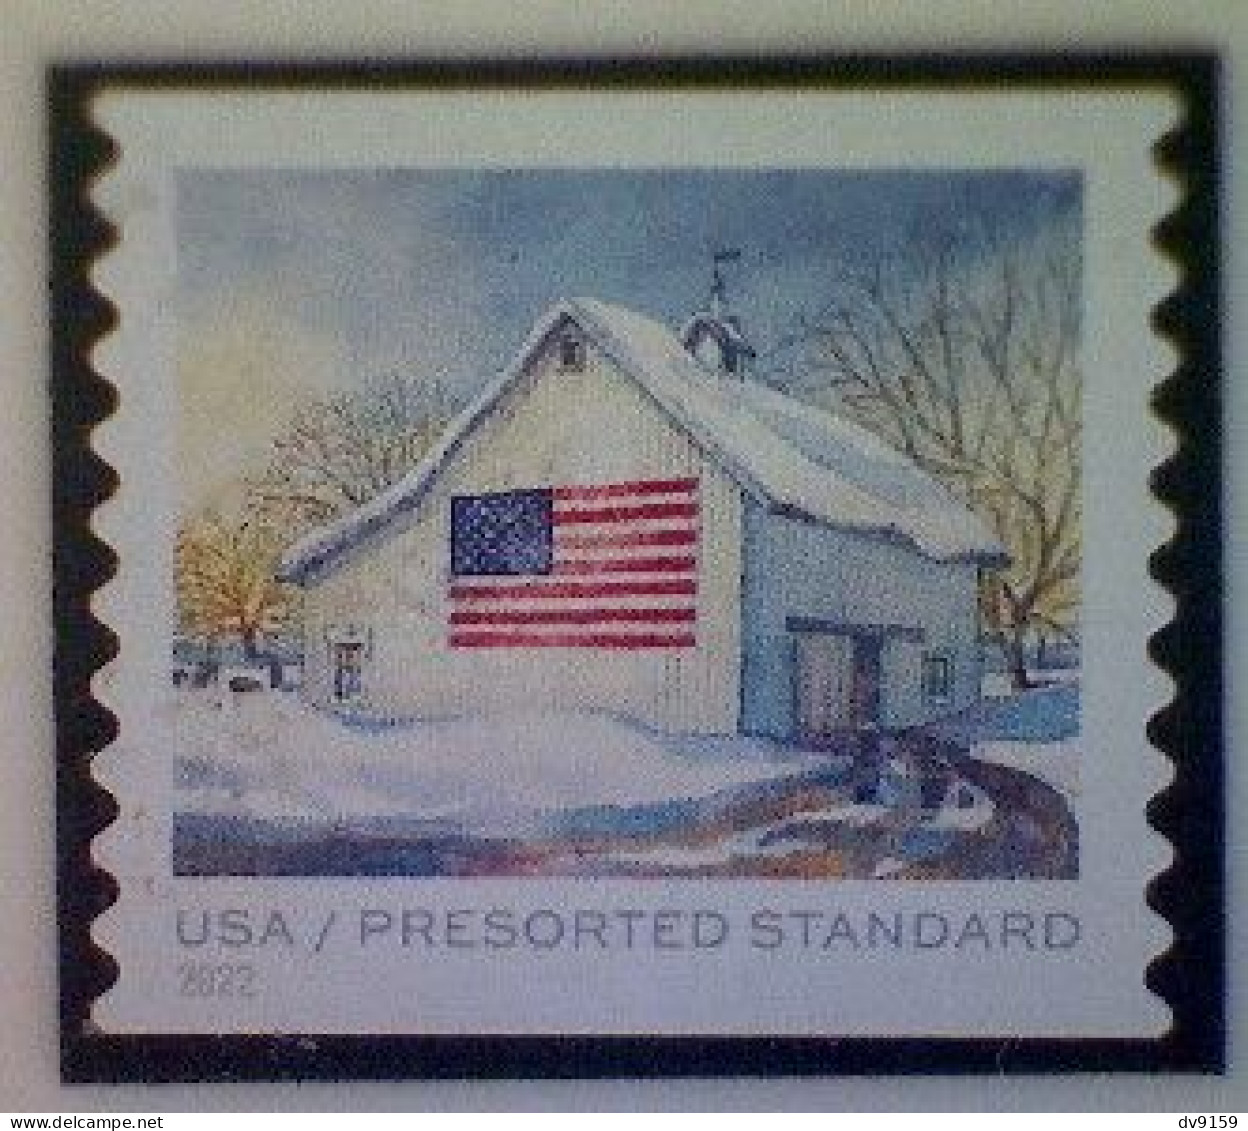 United States, Scott #5685, Used(o), 2022, Flags On Barns, Presort (10¢), Multicolored - Gebraucht